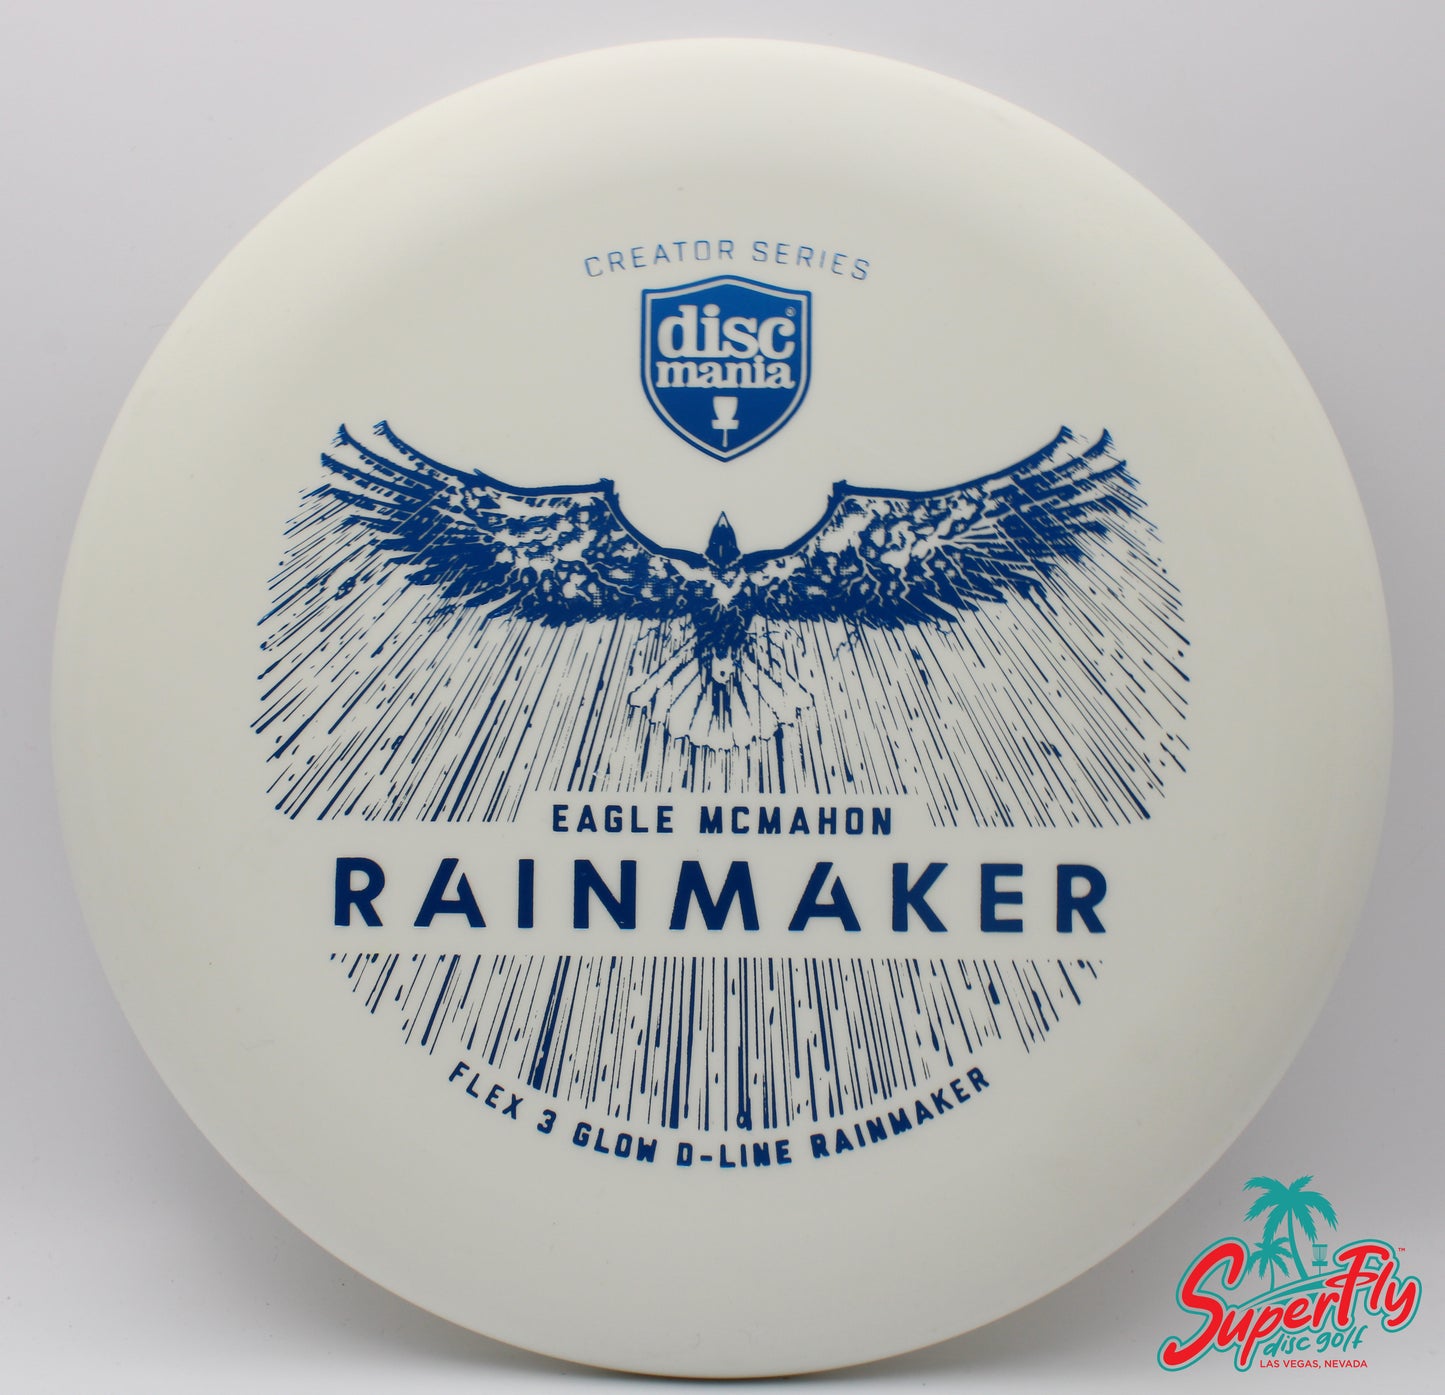 Discmania Eagle McMahon Creator Series Glow D-Line Rainmaker (FLEX 3)